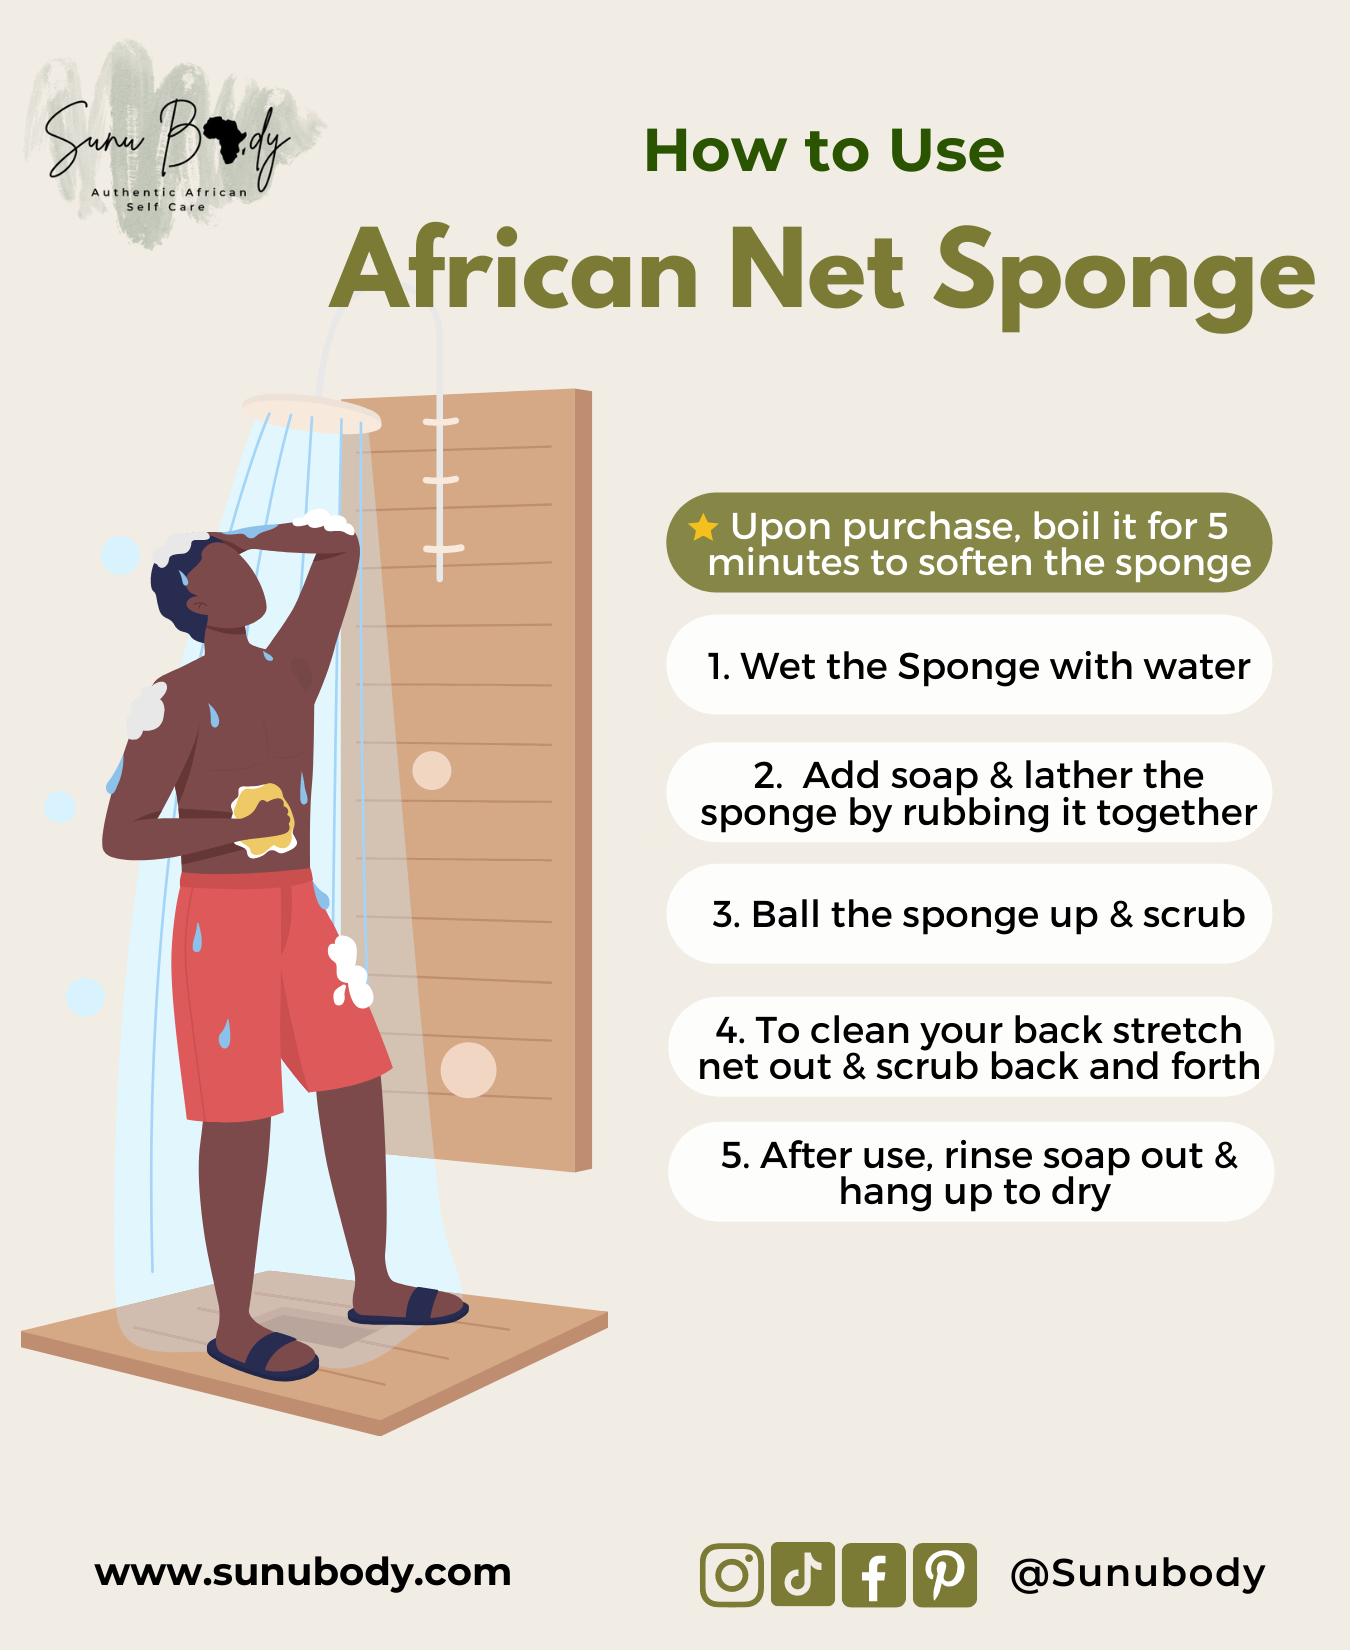 African Net Sponge (Sapo)